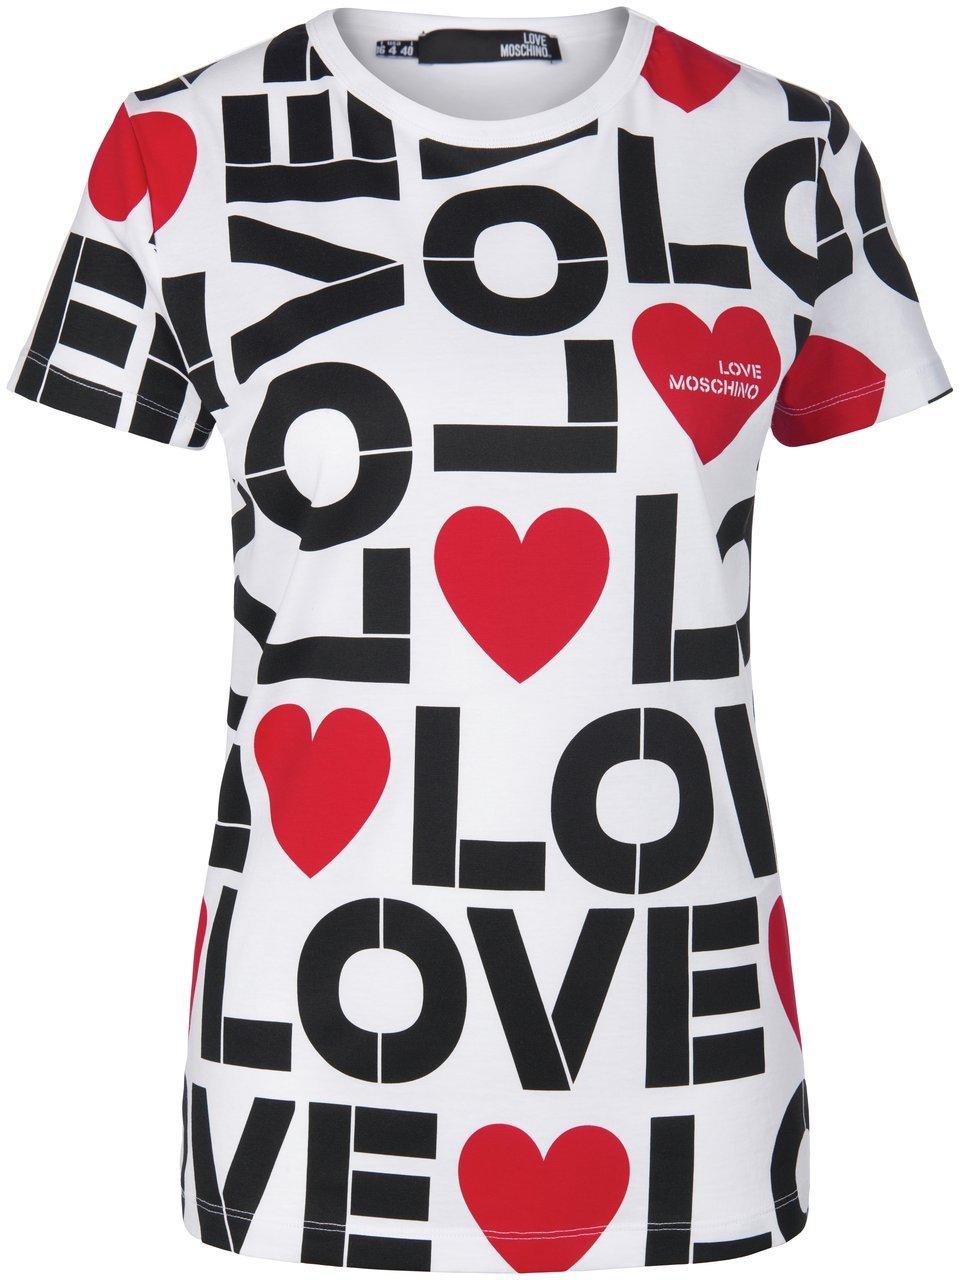 T-shirt Van Love Moschino multicolour